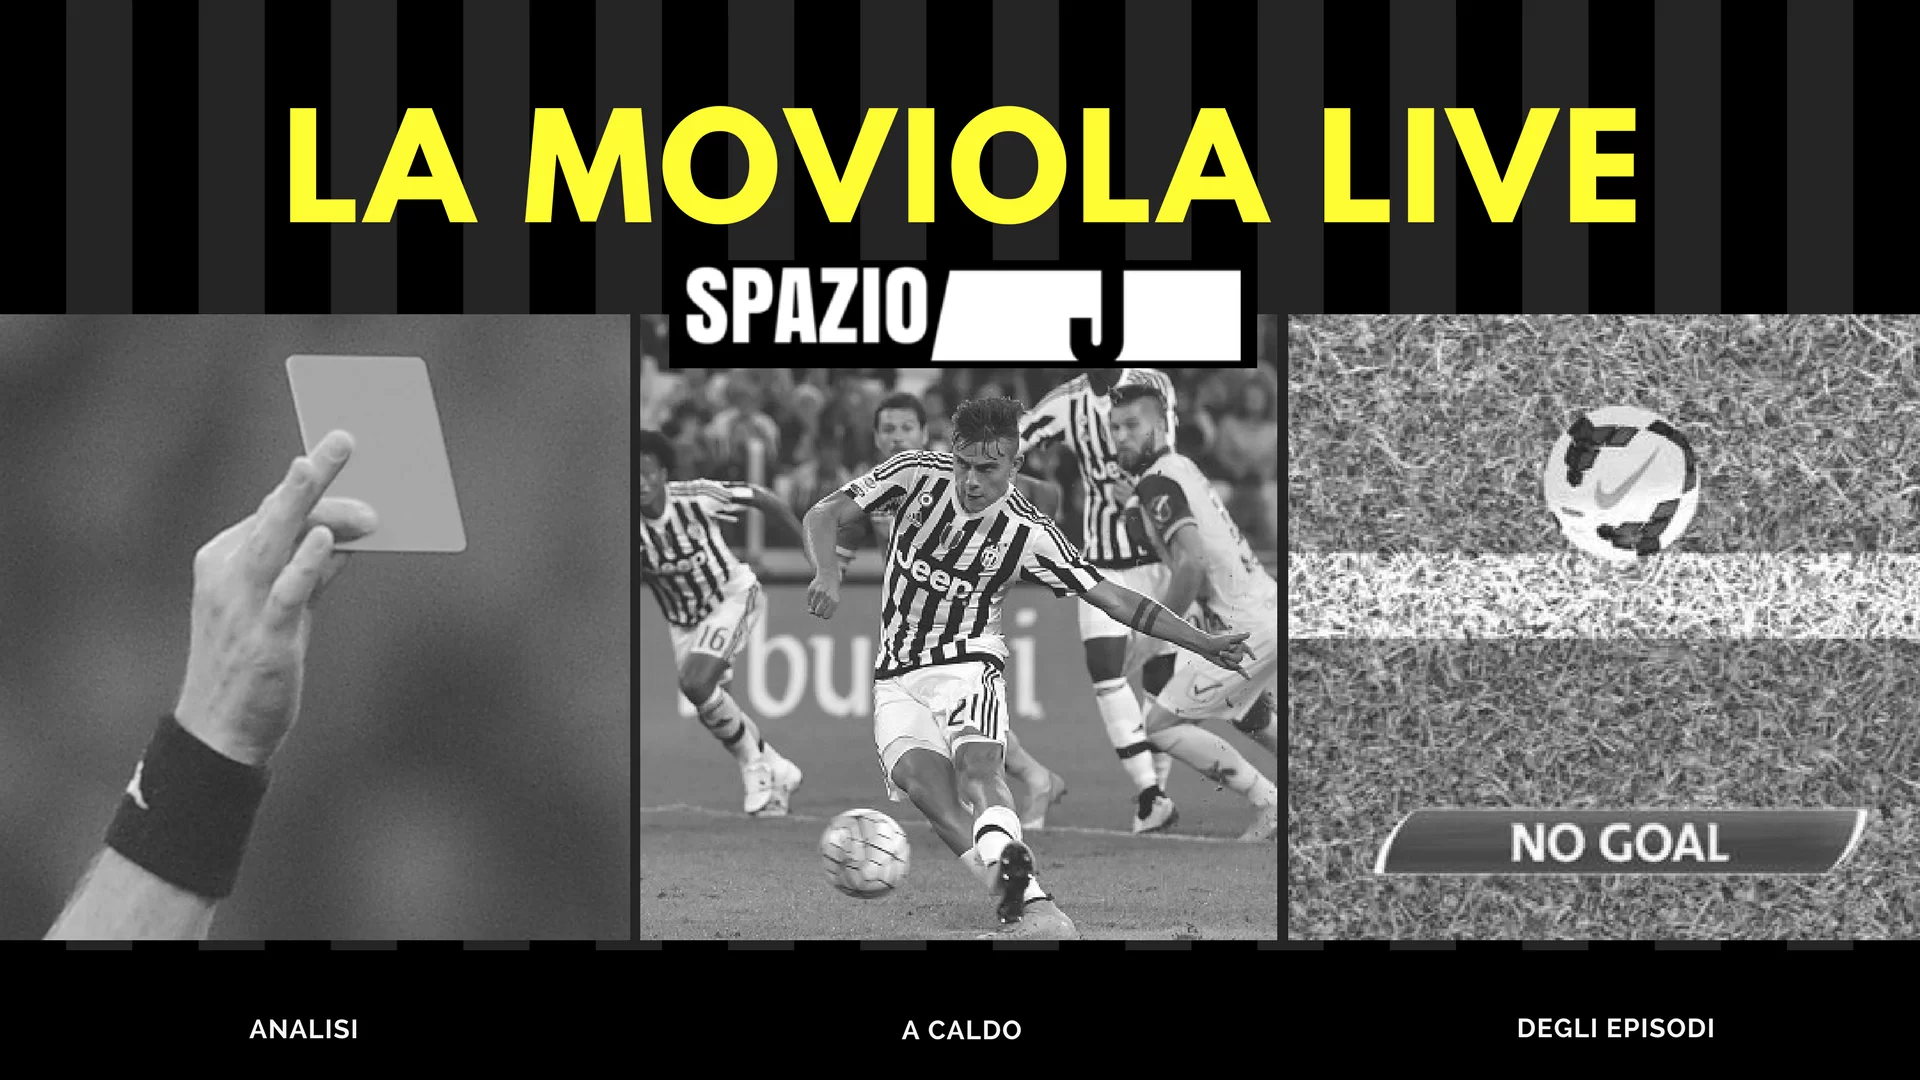 Moviola Live Napoli-Juve – Regolari i due gol, partita corretta